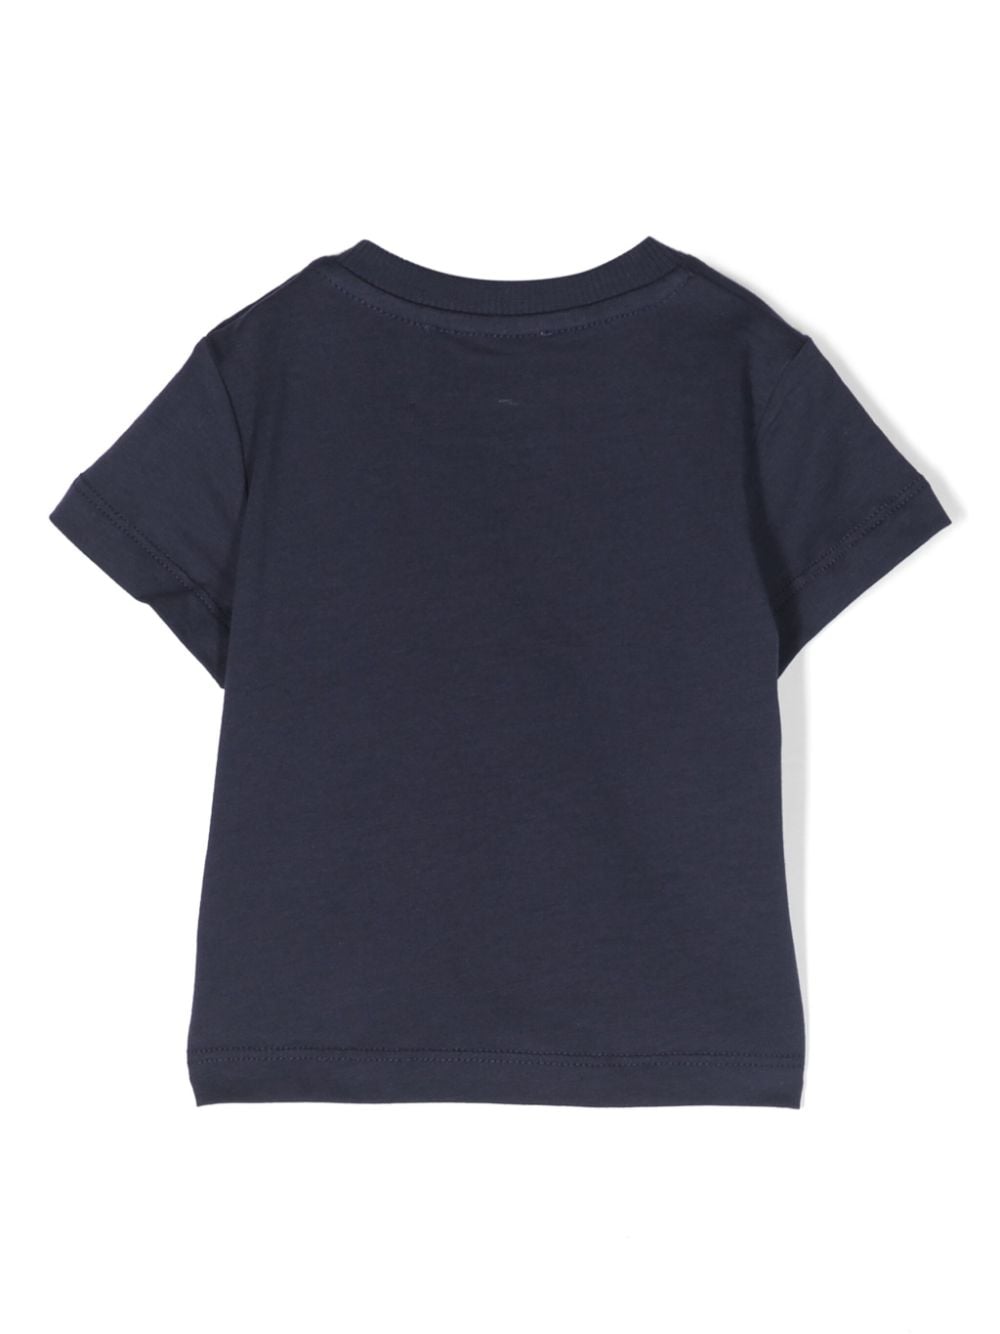 Blue cotton baby t-shirt